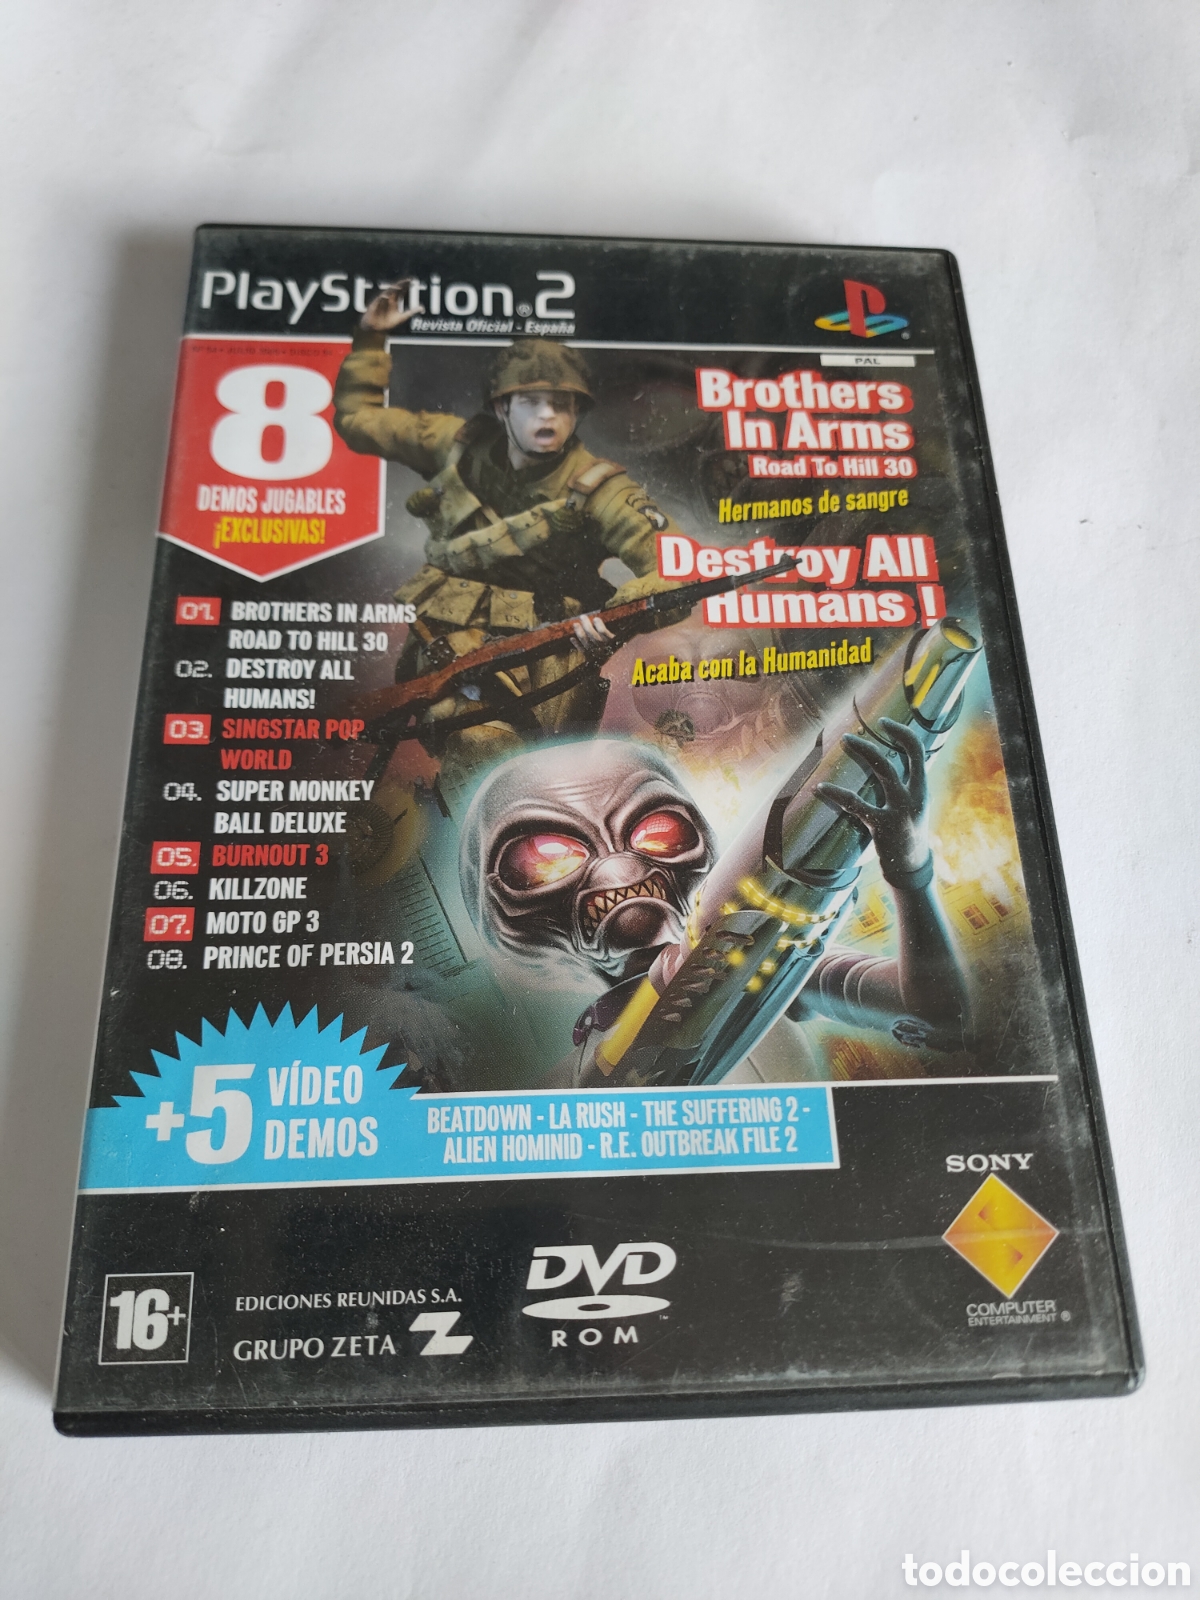 Consola PS2 Segunda Mano